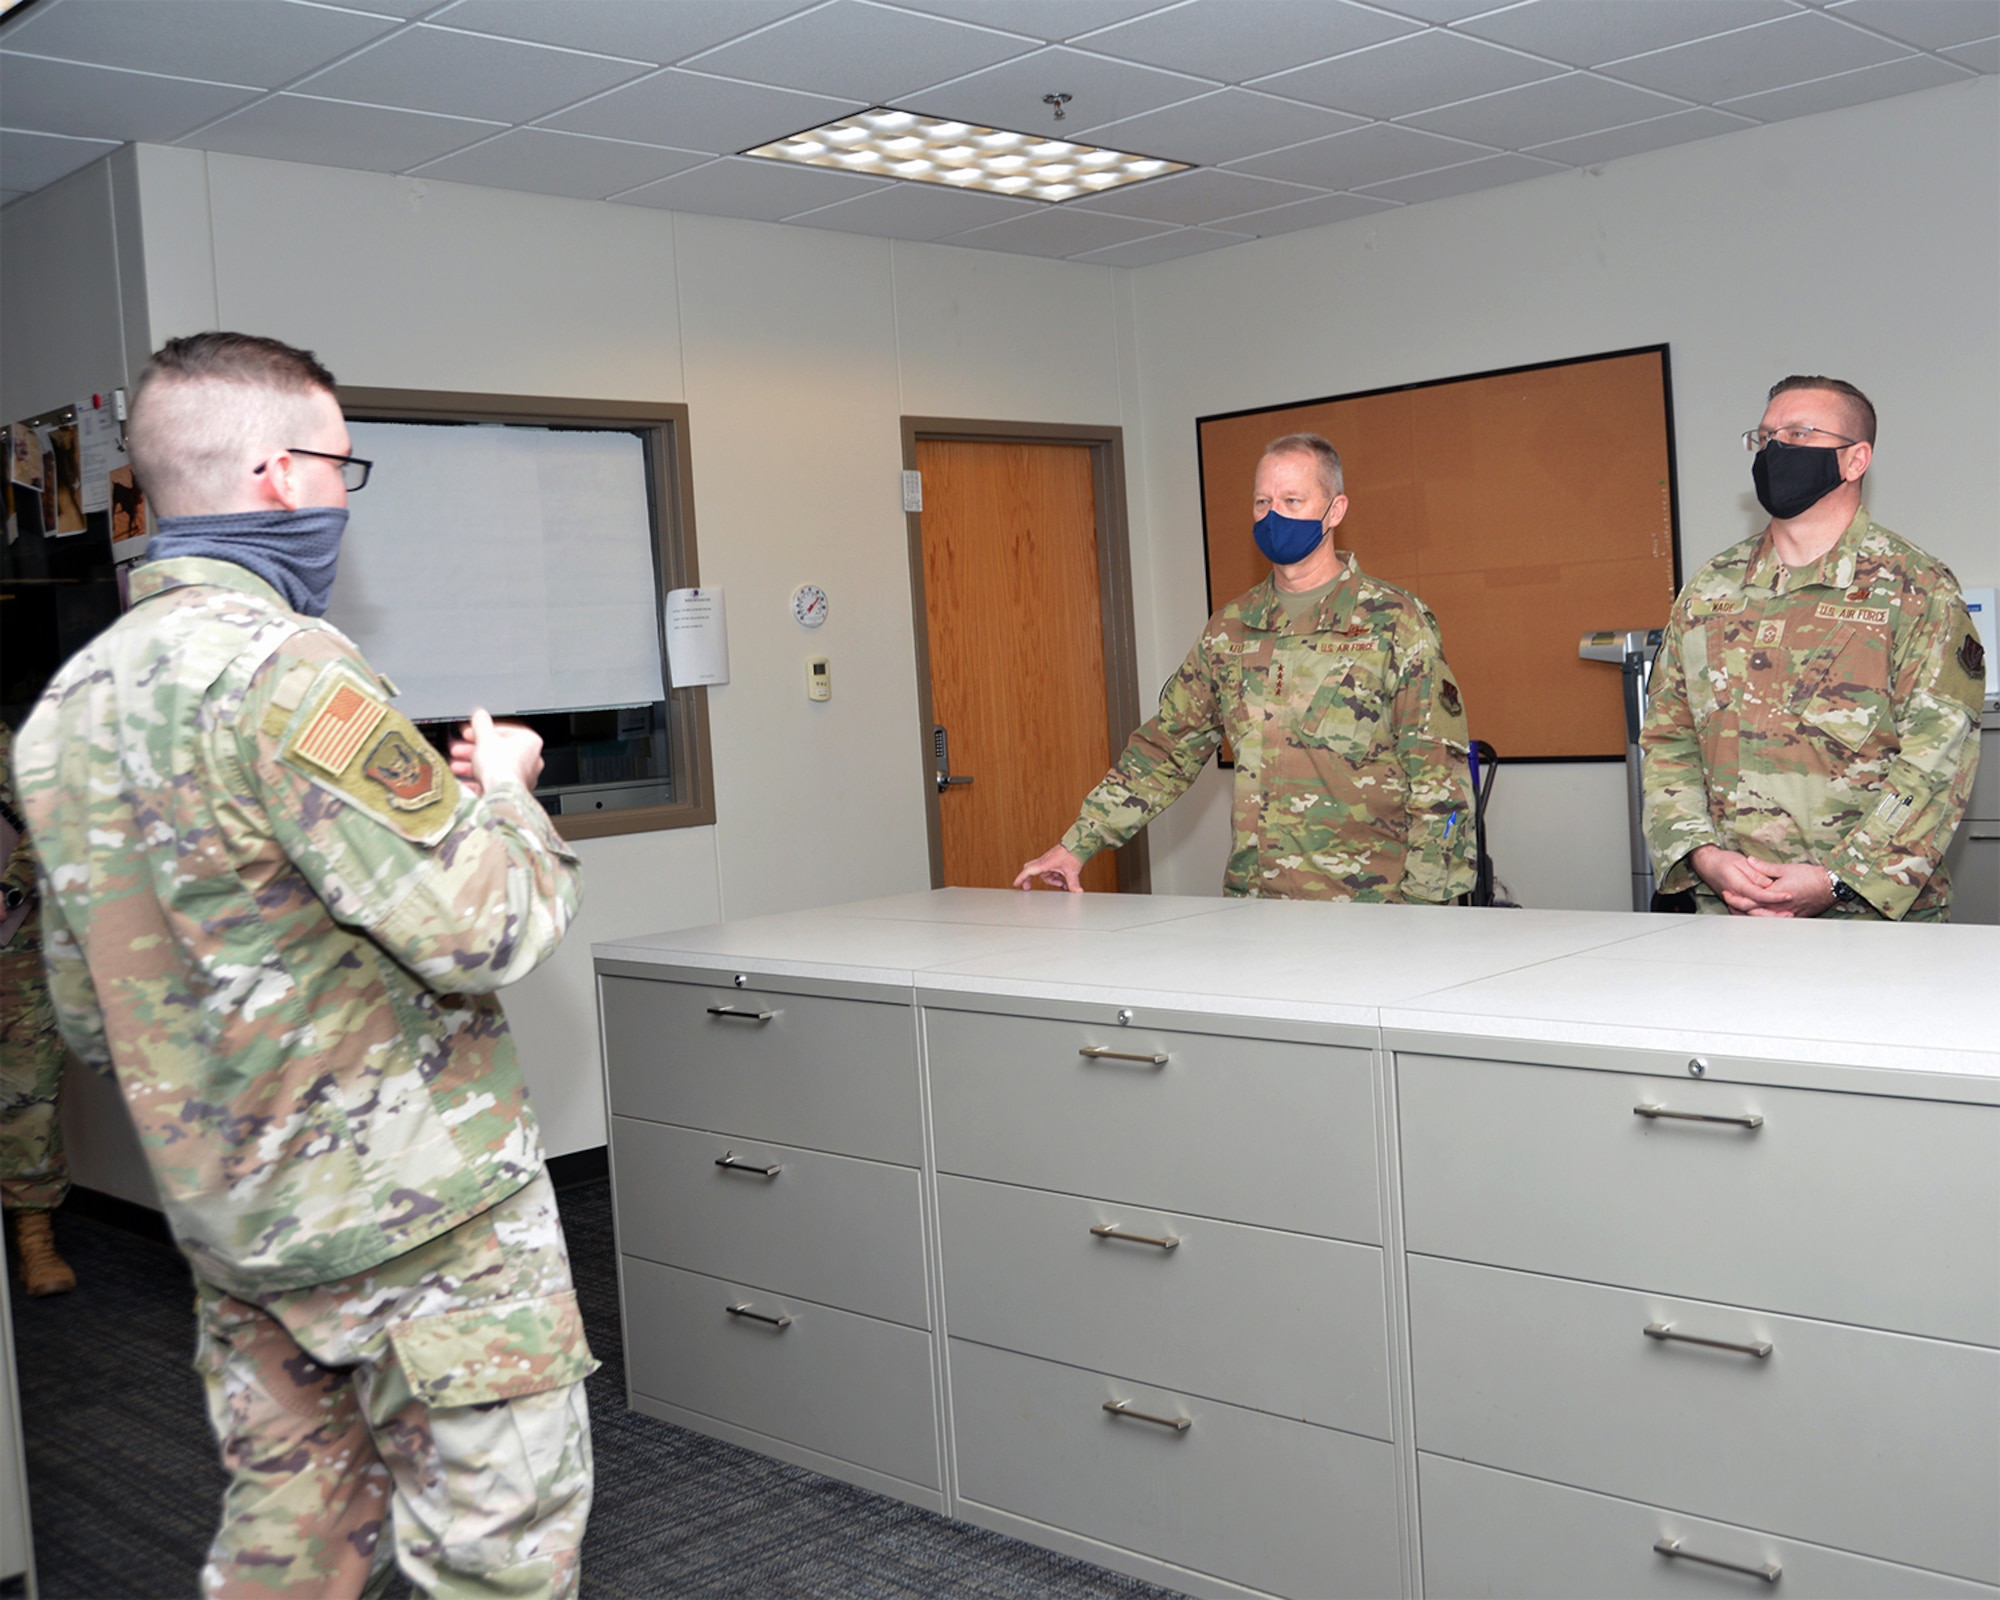 An officer in uniform briefs leadership in uniform in a room.